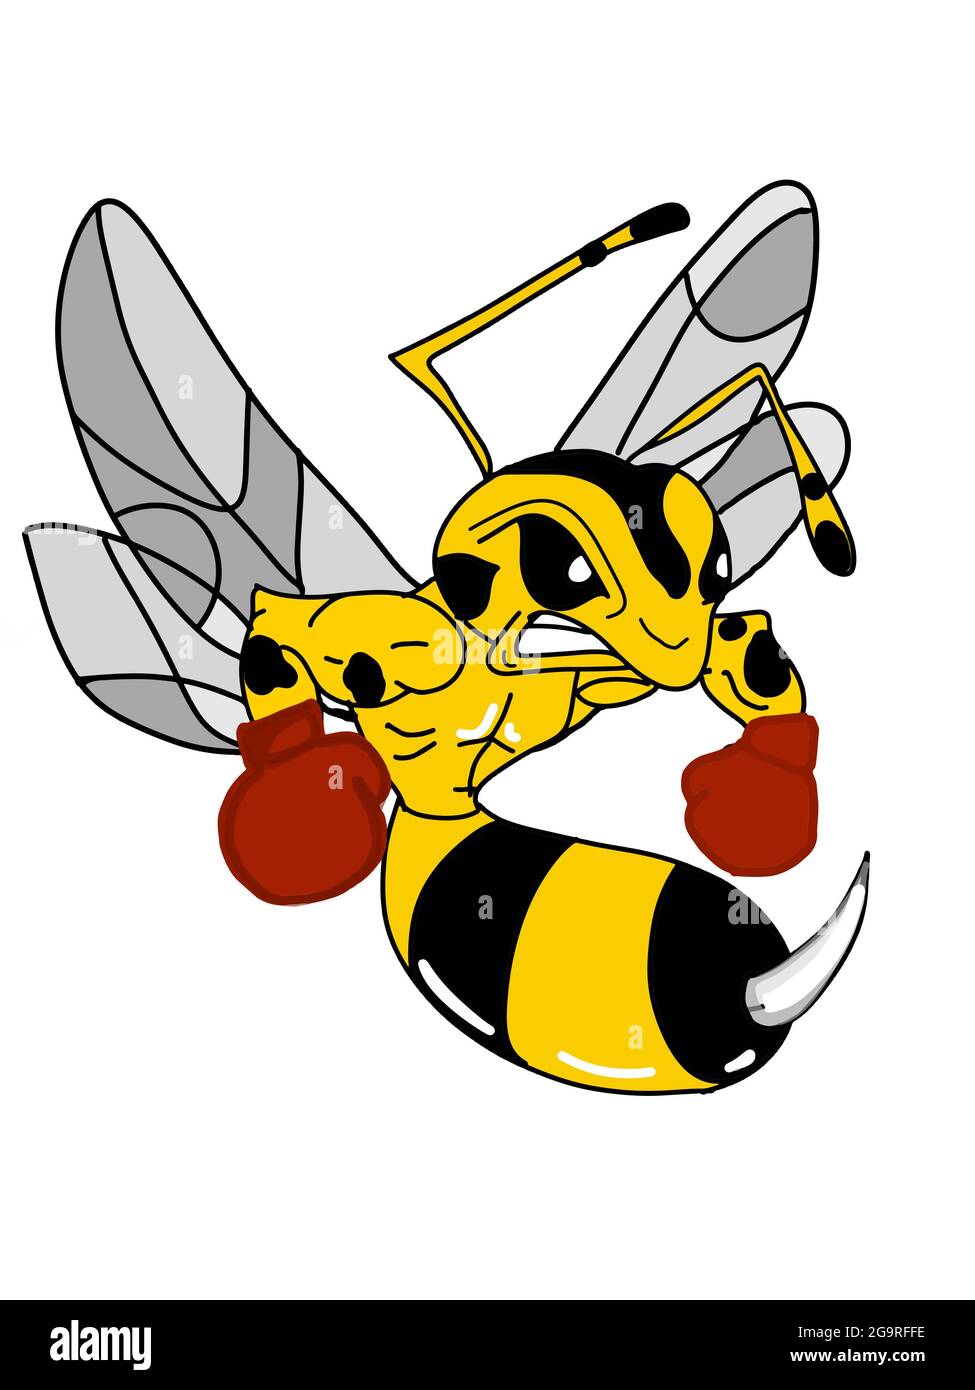 Boxer Bee Mascot characters illustration Stock Photo - Alamy